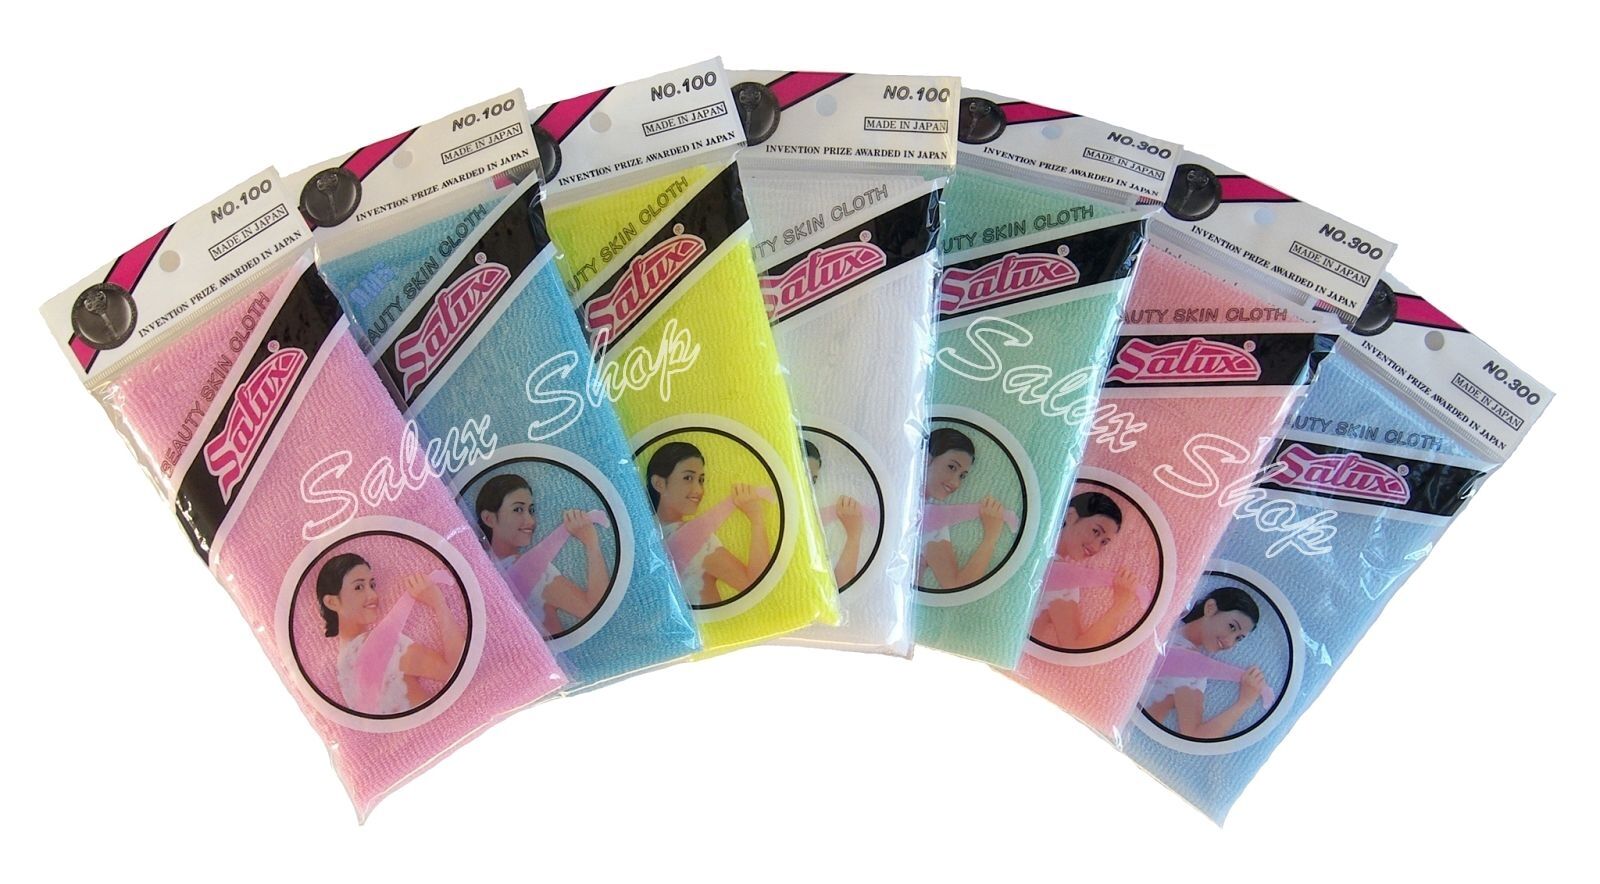 3 Pack Original Salux Japanese Exfoliating Nylon Beauty Skin Cloths $5.60 Each